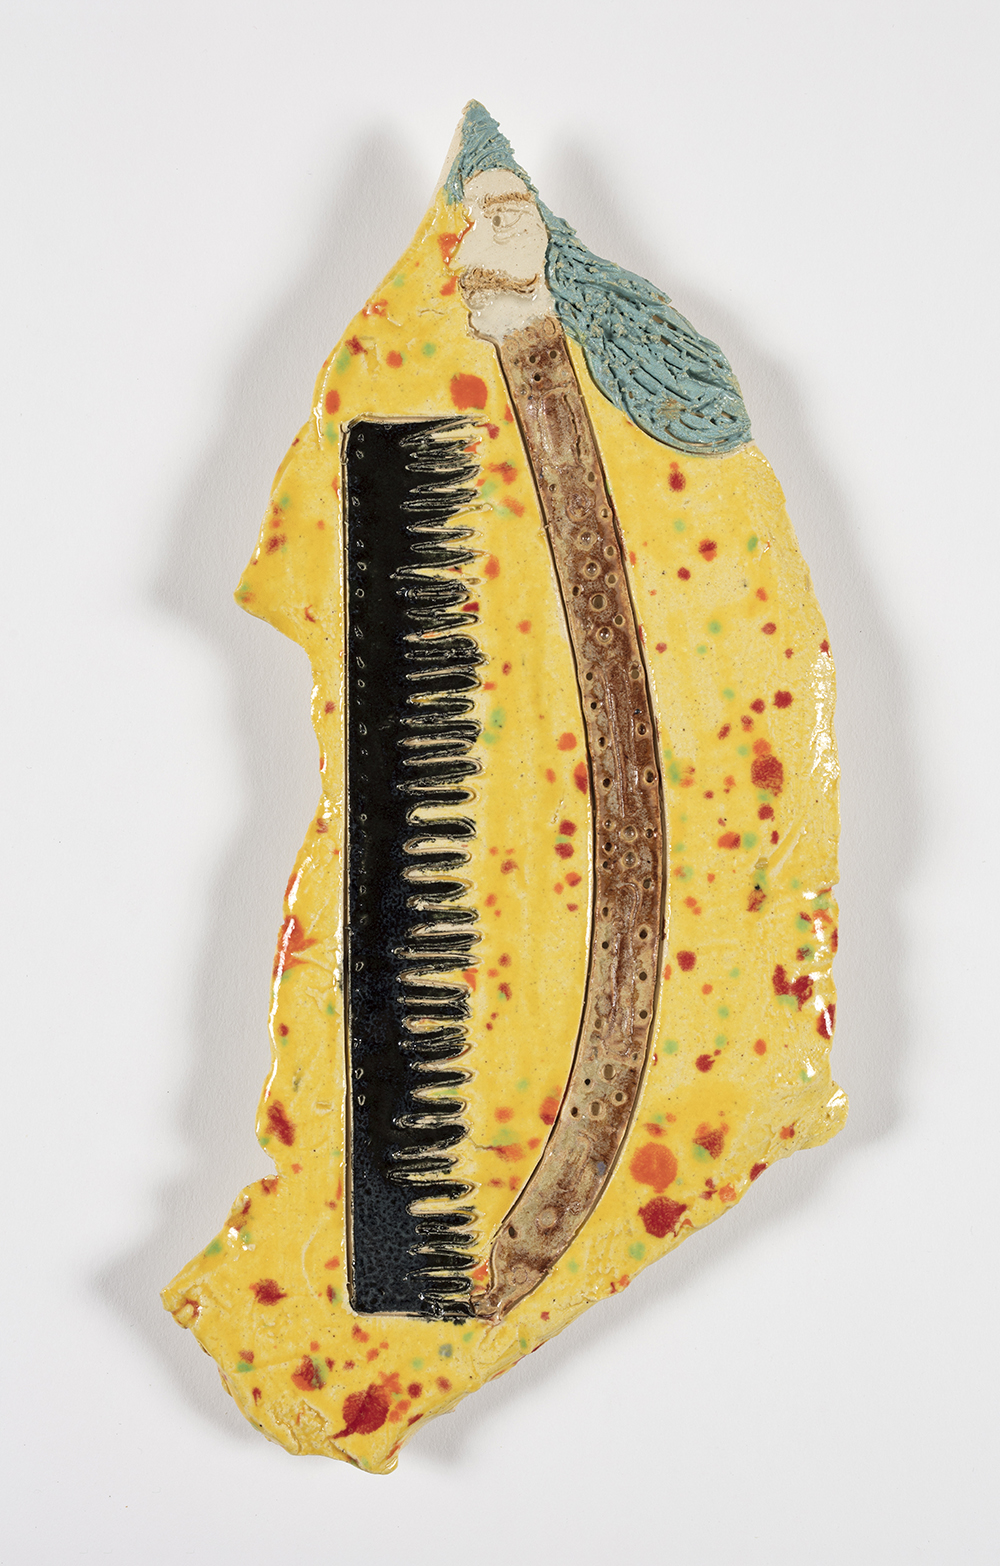 Kevin McNamee-Tweed.<em> Untitled (Comb)</em>, 2019. Glazed ceramic, 9 3/4 x 5 inches (24.8 x 12.7 cm)